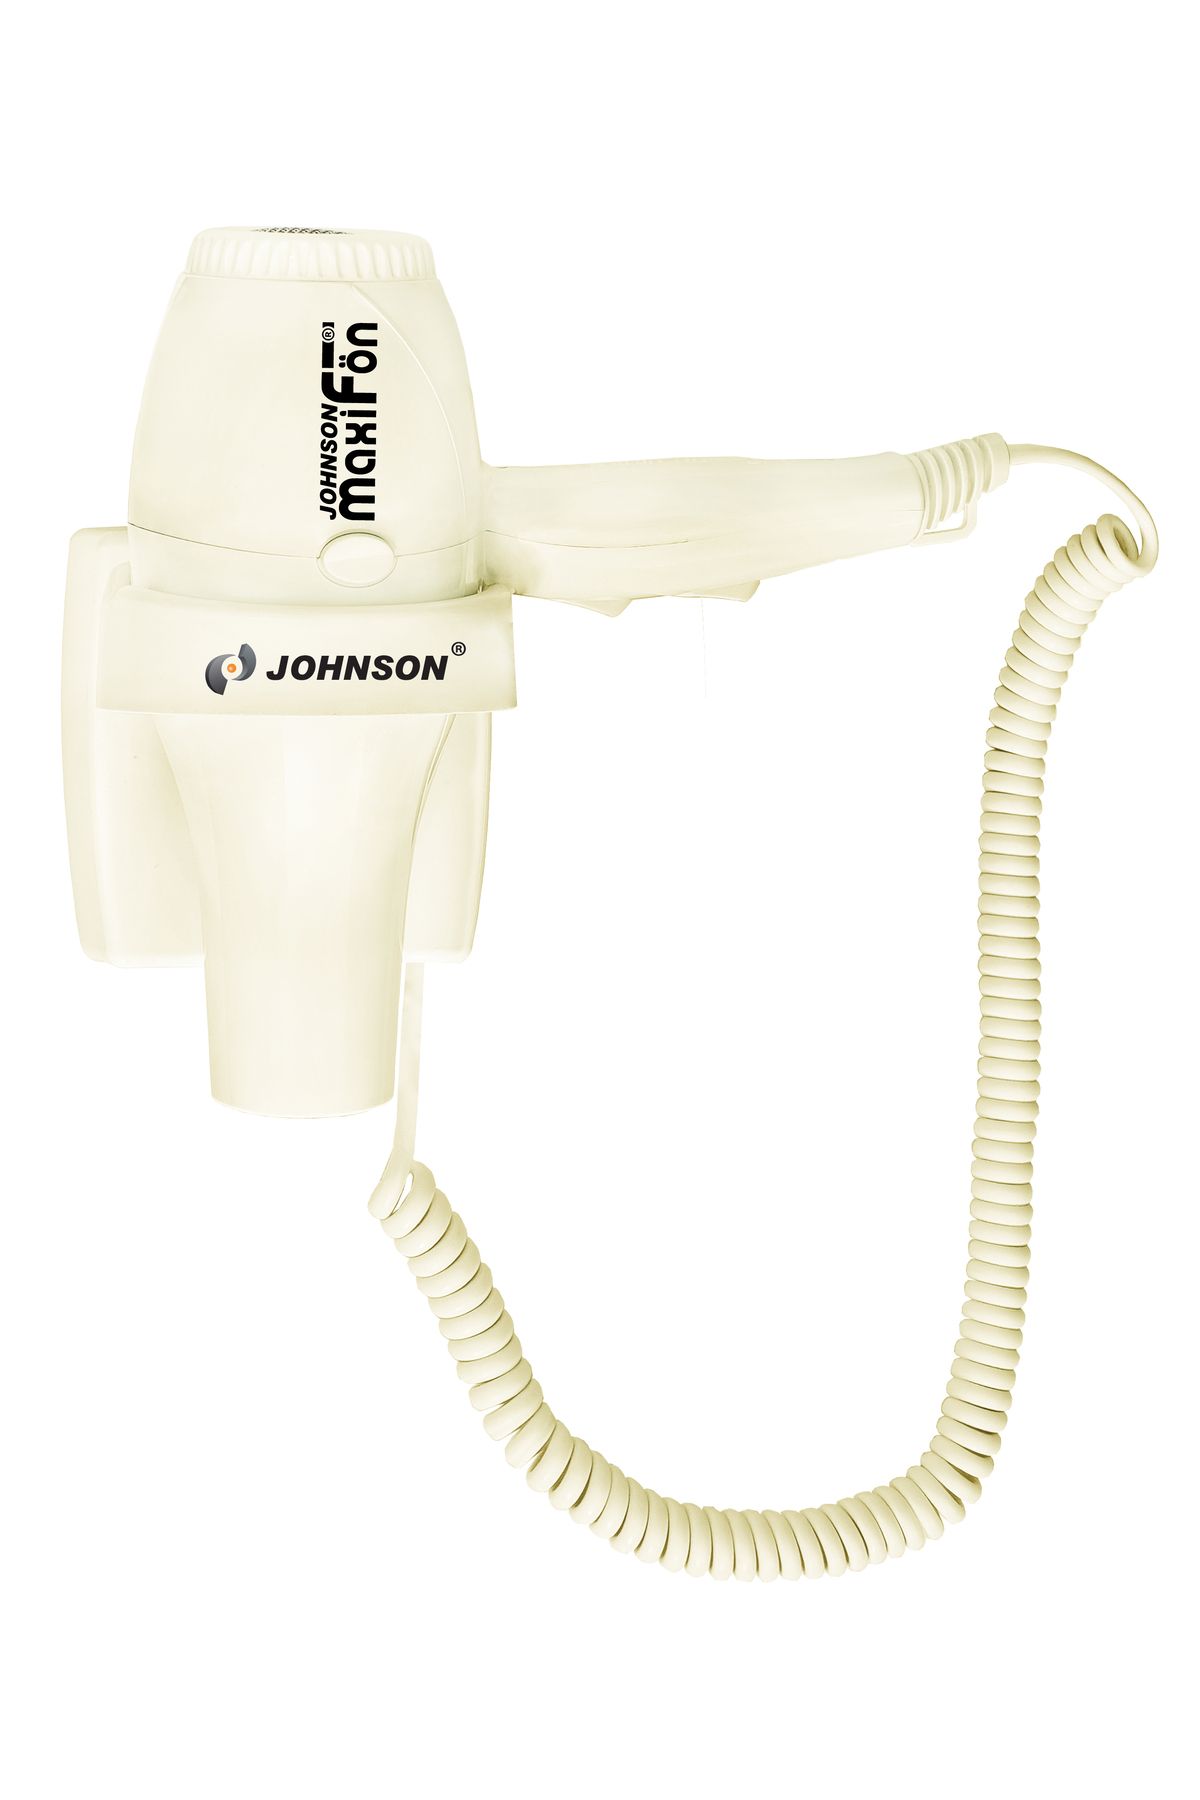 Johnson MaxiFön Otel Tipi Saç Kurutma Makinesi 1600w